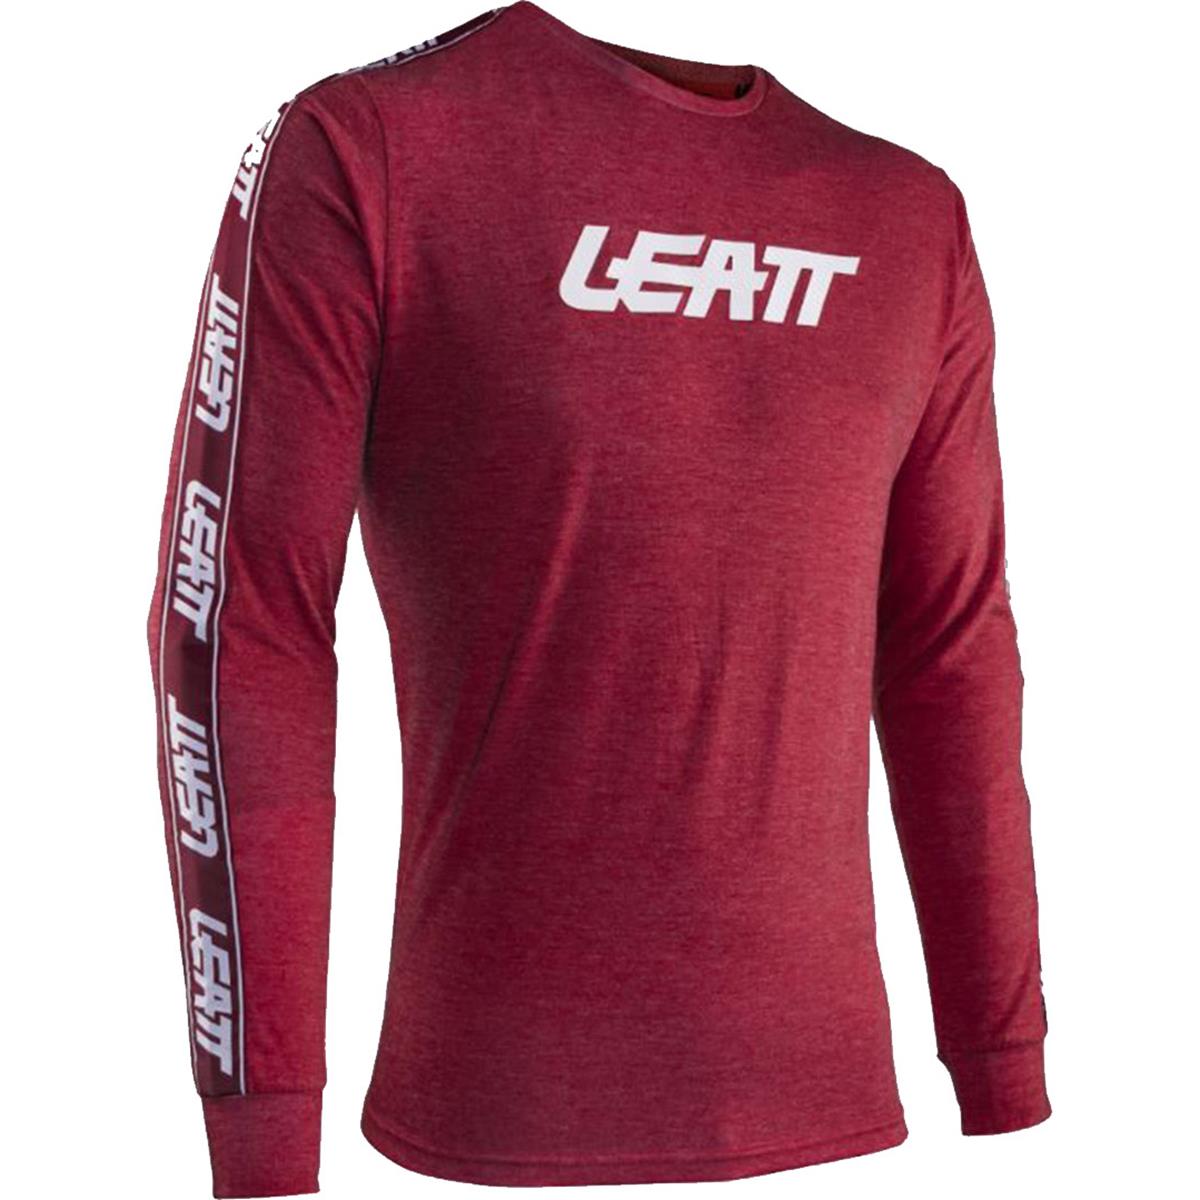 Leatt Long Sleeve Shirt Premium V24 Ruby